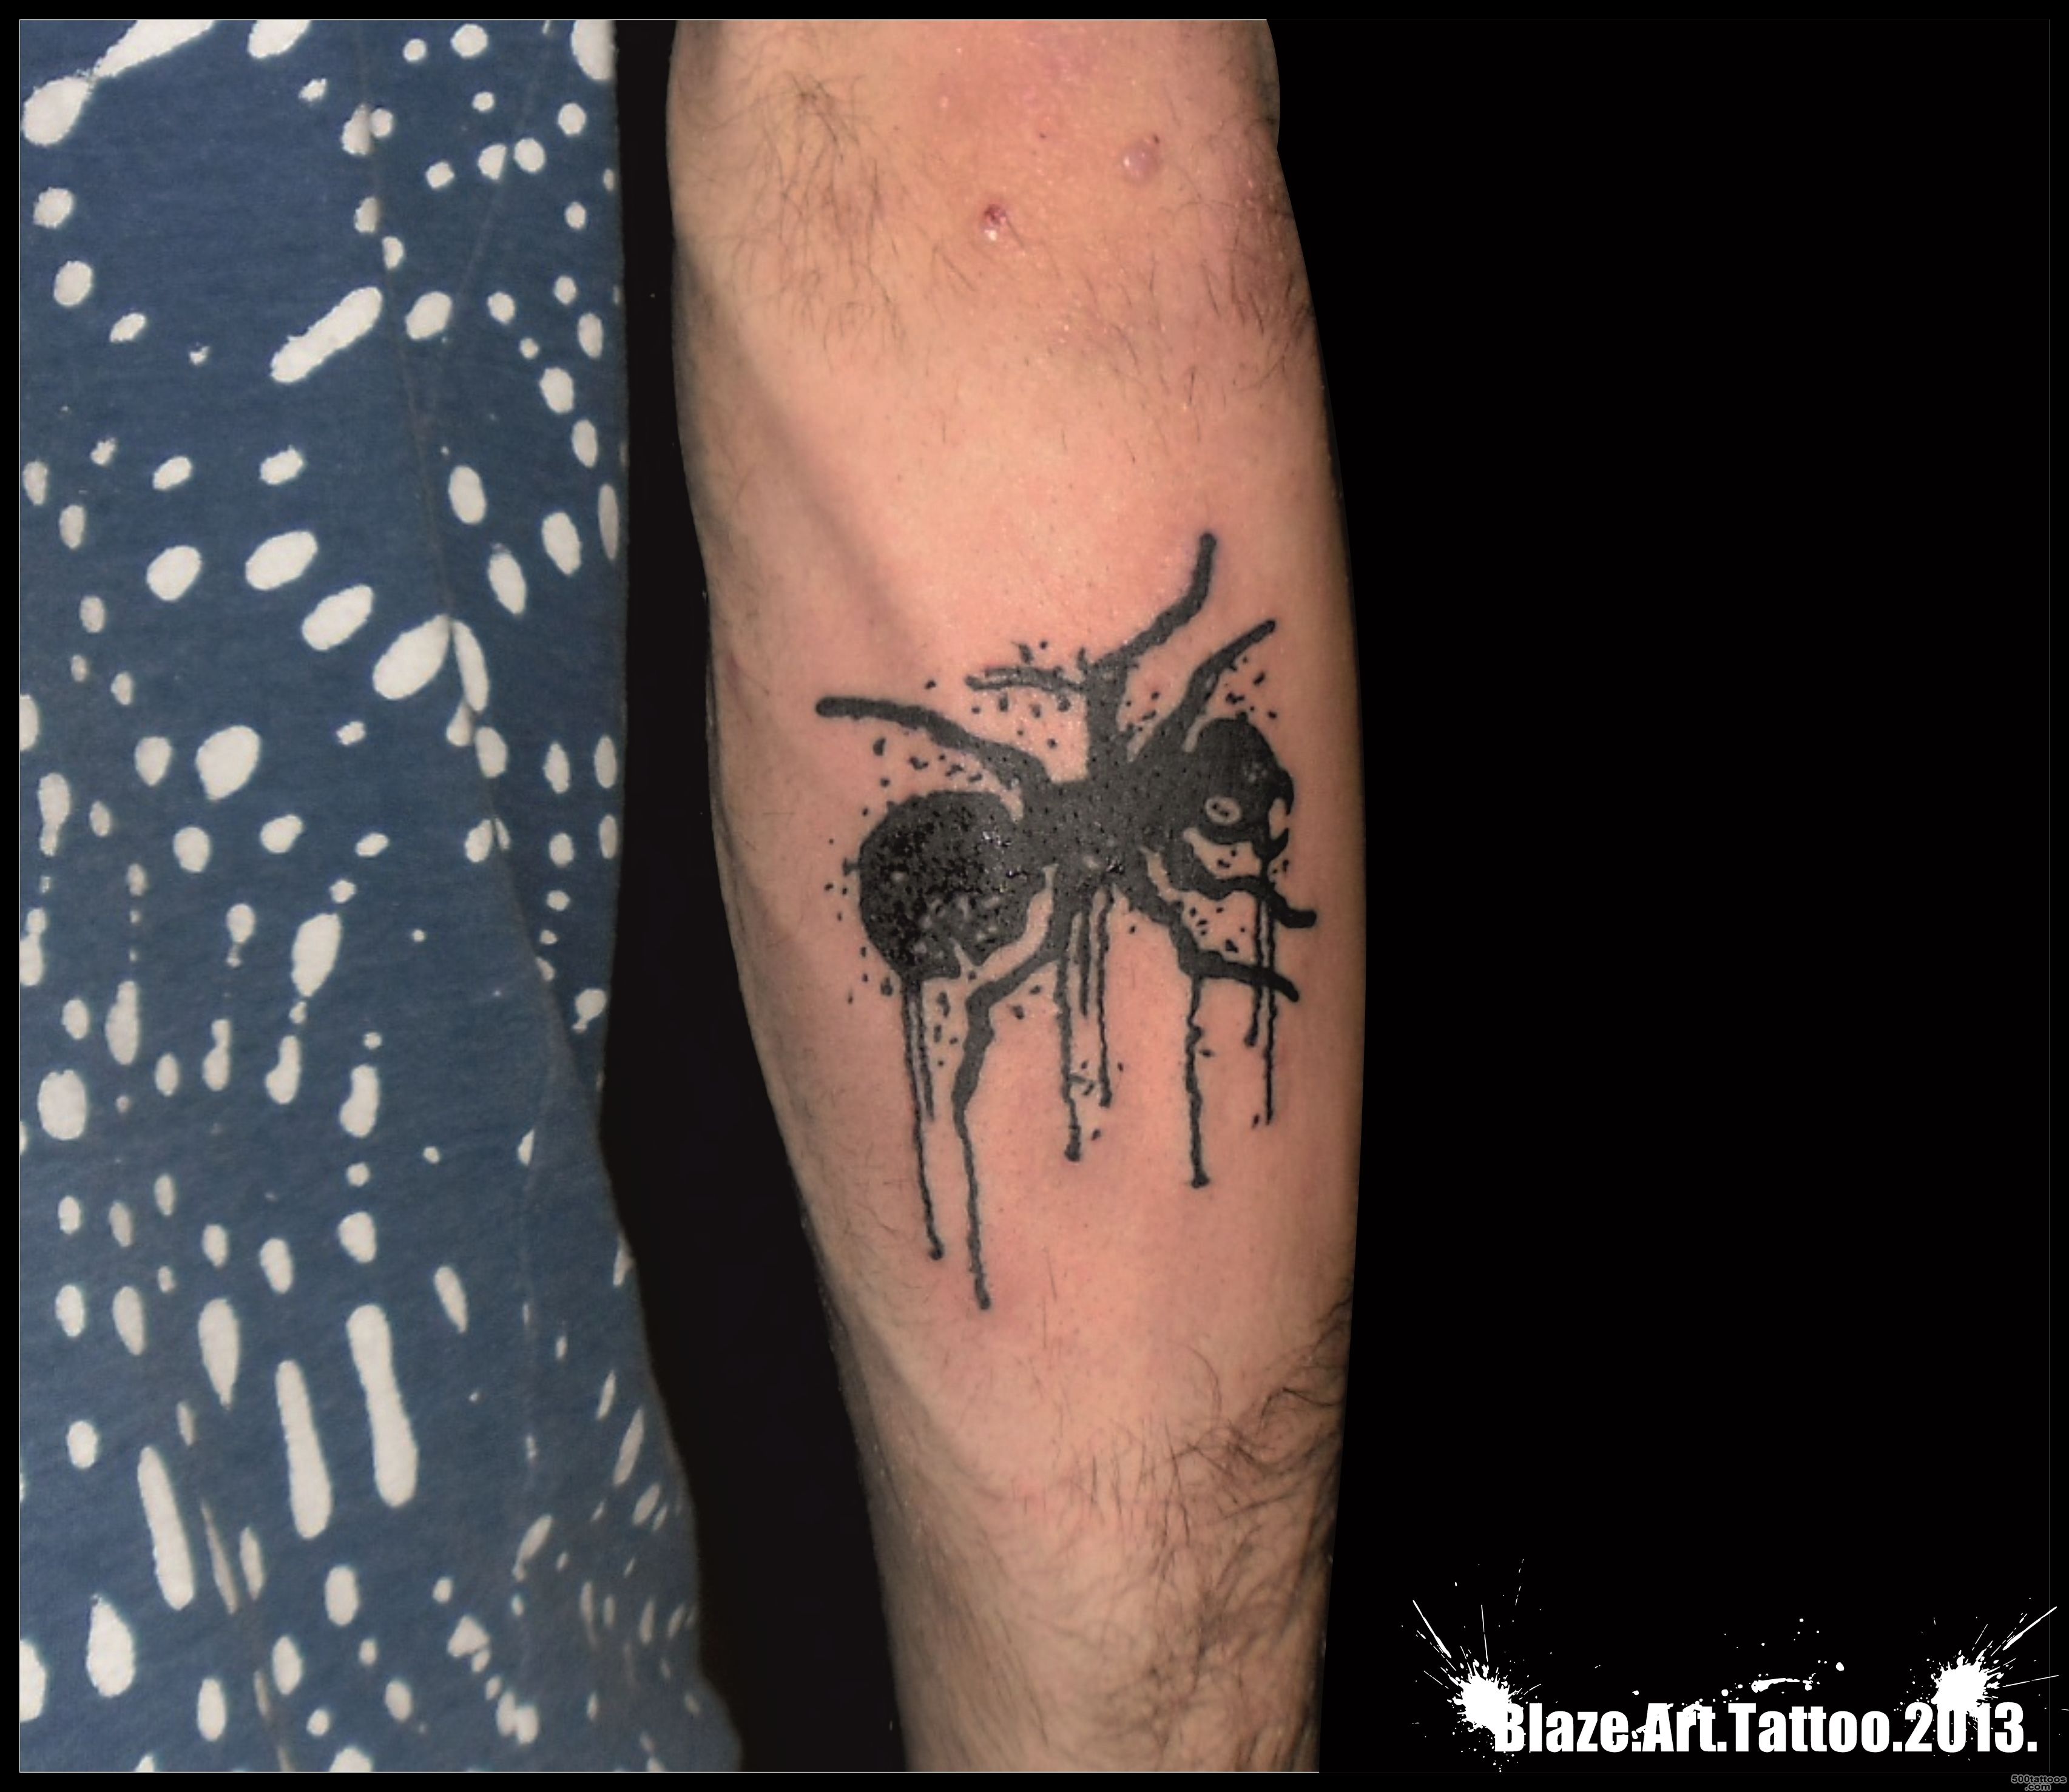 The Prodigy ant tattoo by Blaze Art  Tattoo.com_31